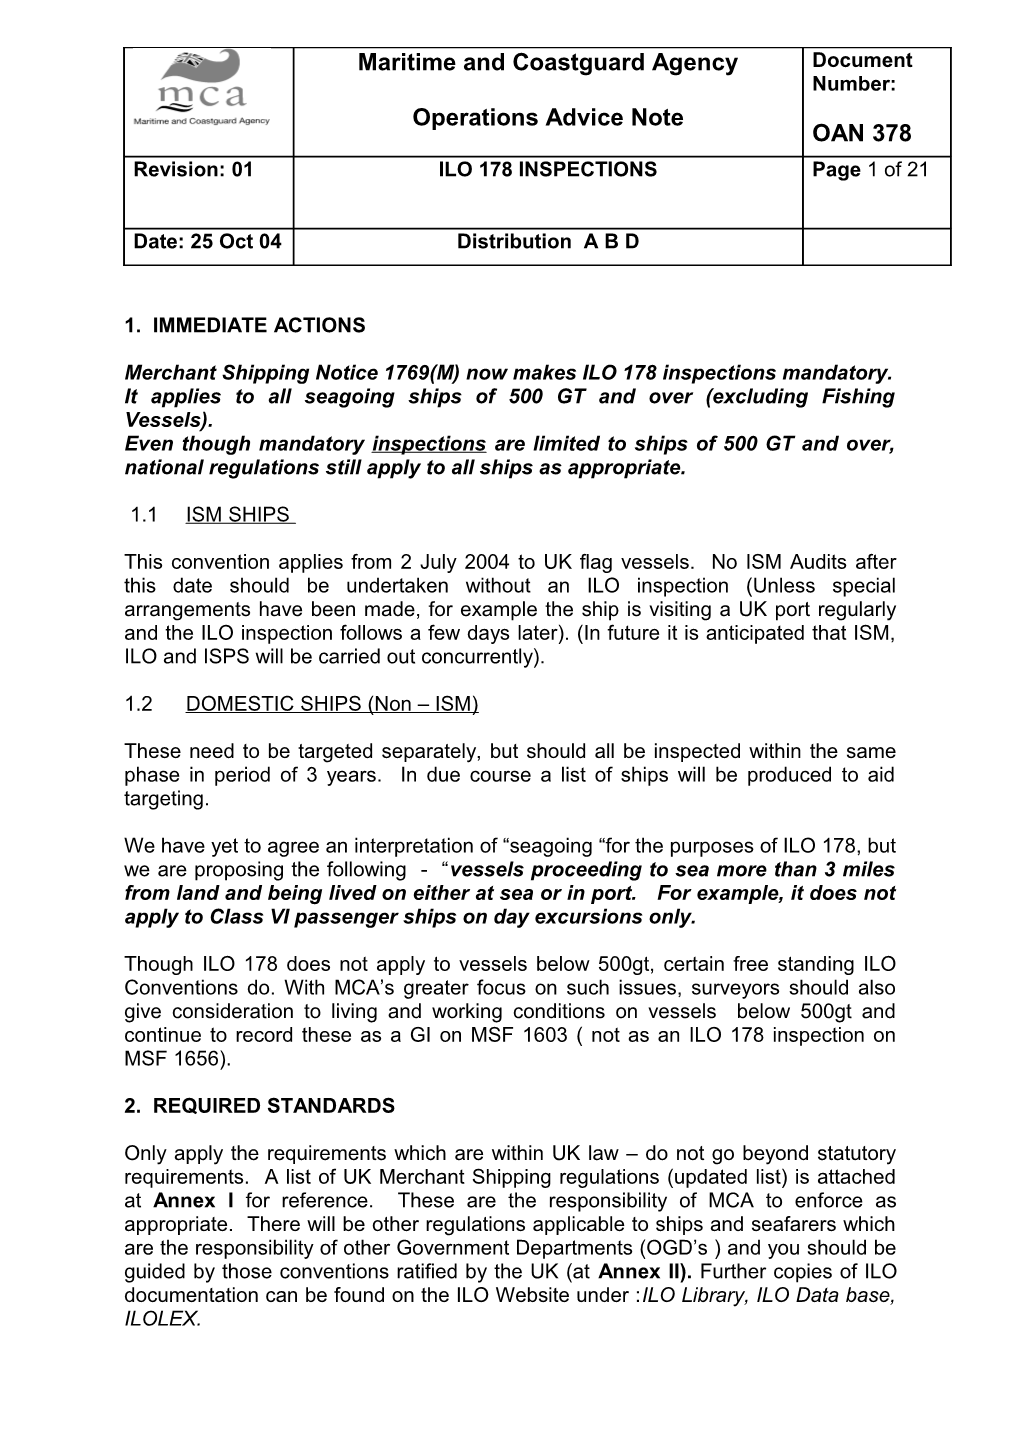 Merchant Shipping Notice 1769(M) Now Makes ILO 178 Inspections Mandatory